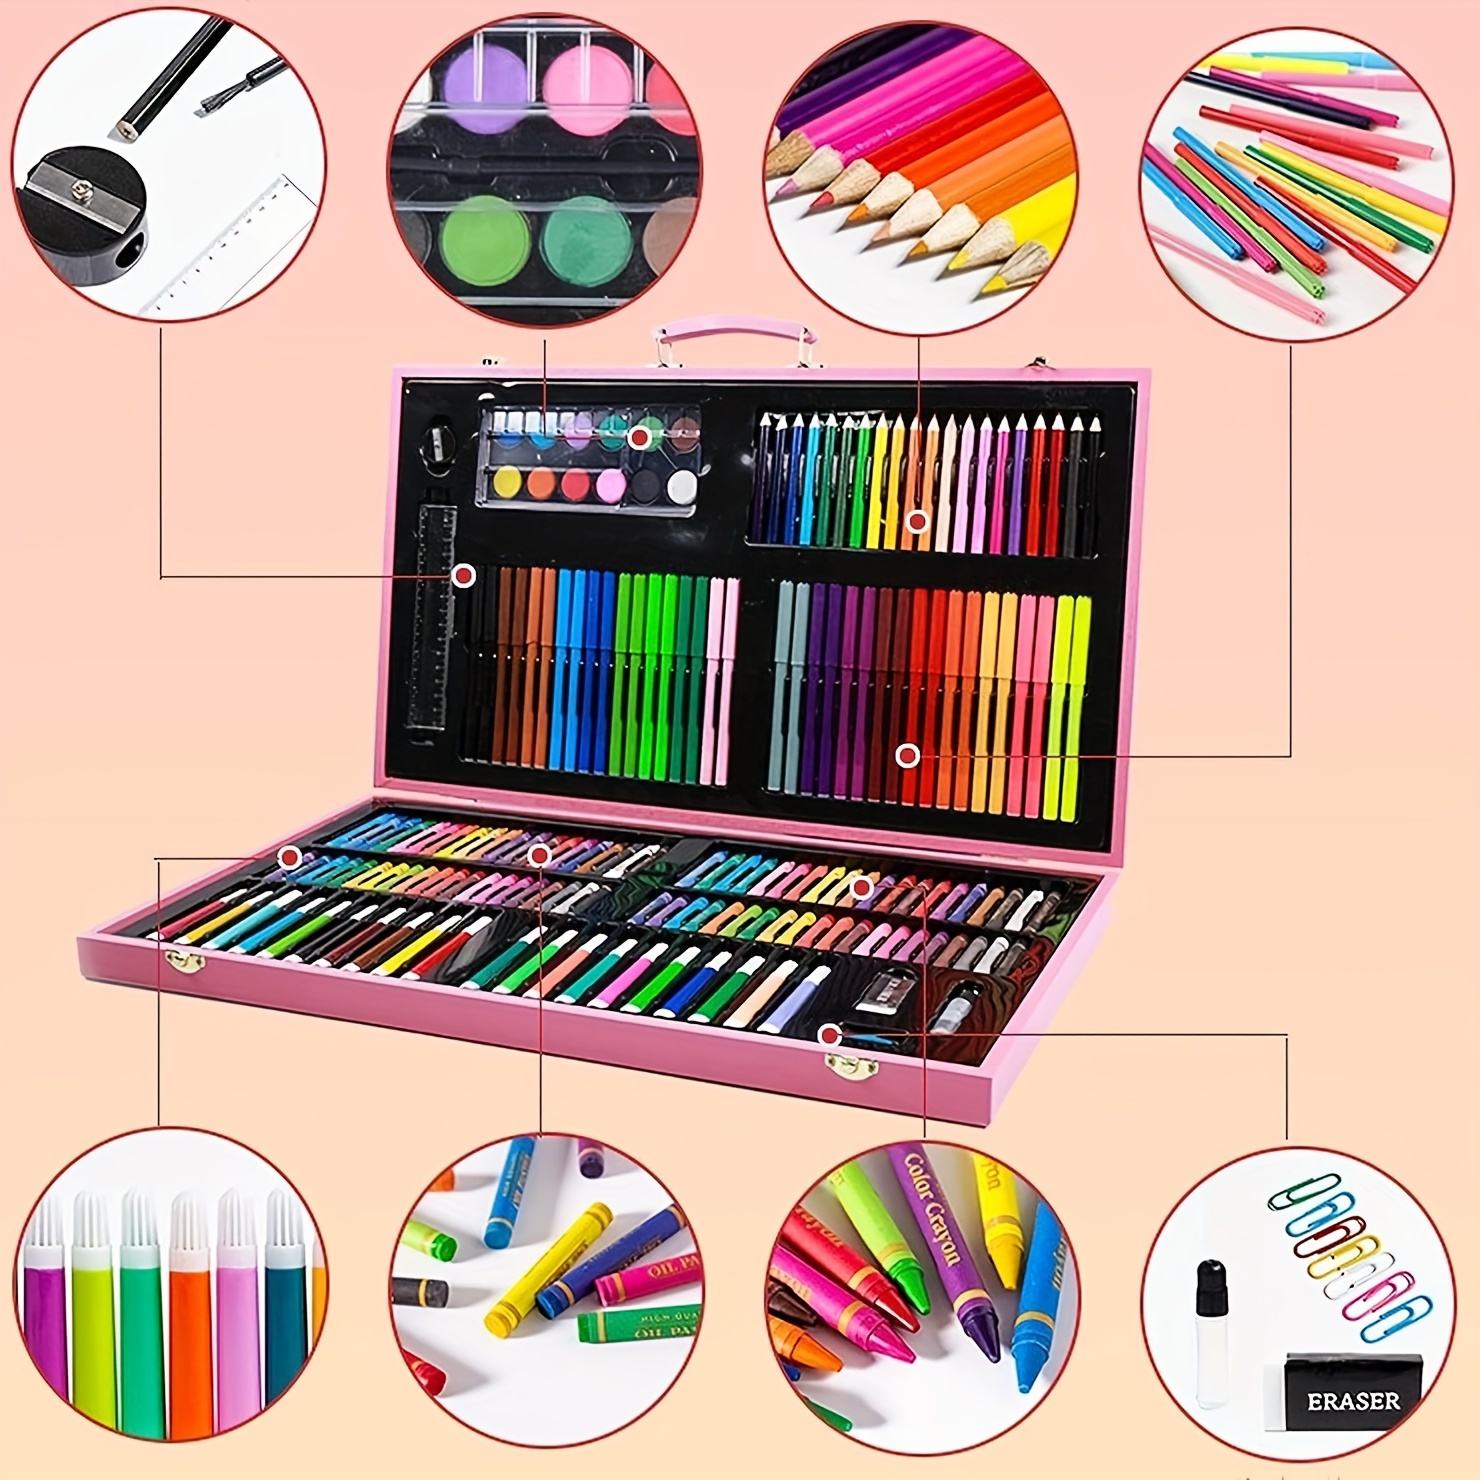 180pcs Painting Kits Oil Painting Sticks, Watercolor Pens, Crayons